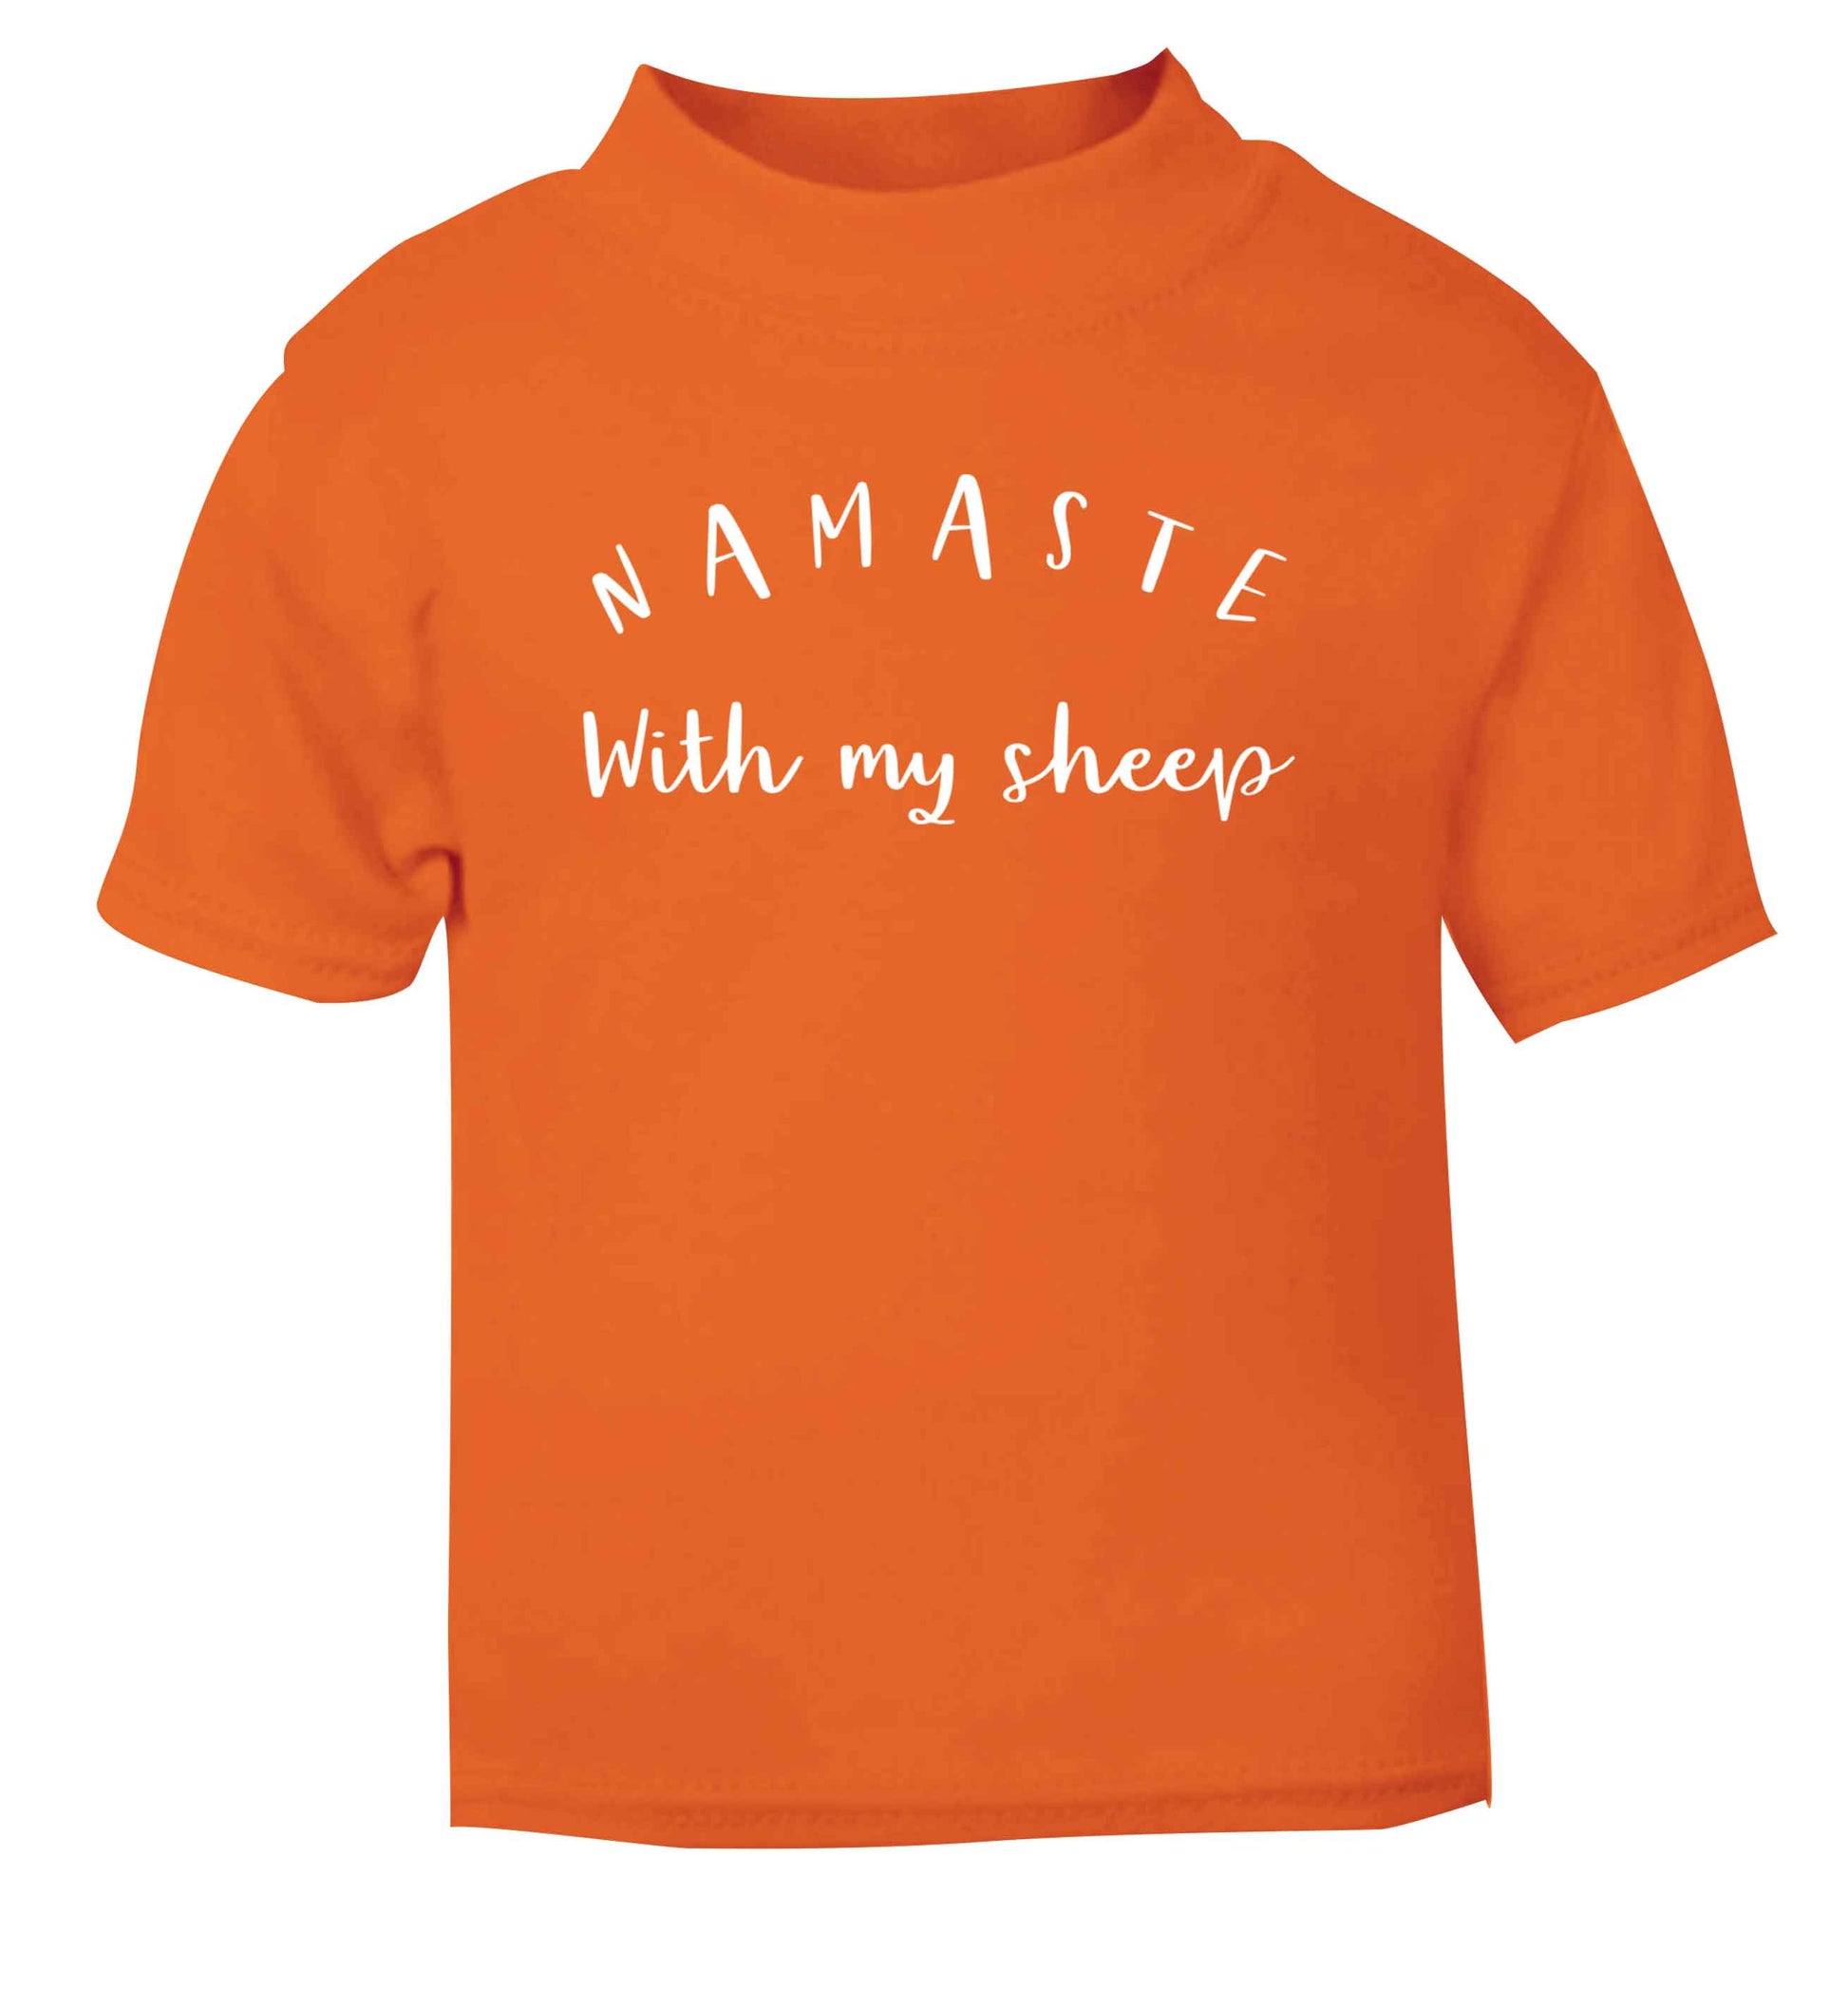 Namaste with my sheep orange Baby Toddler Tshirt 2 Years